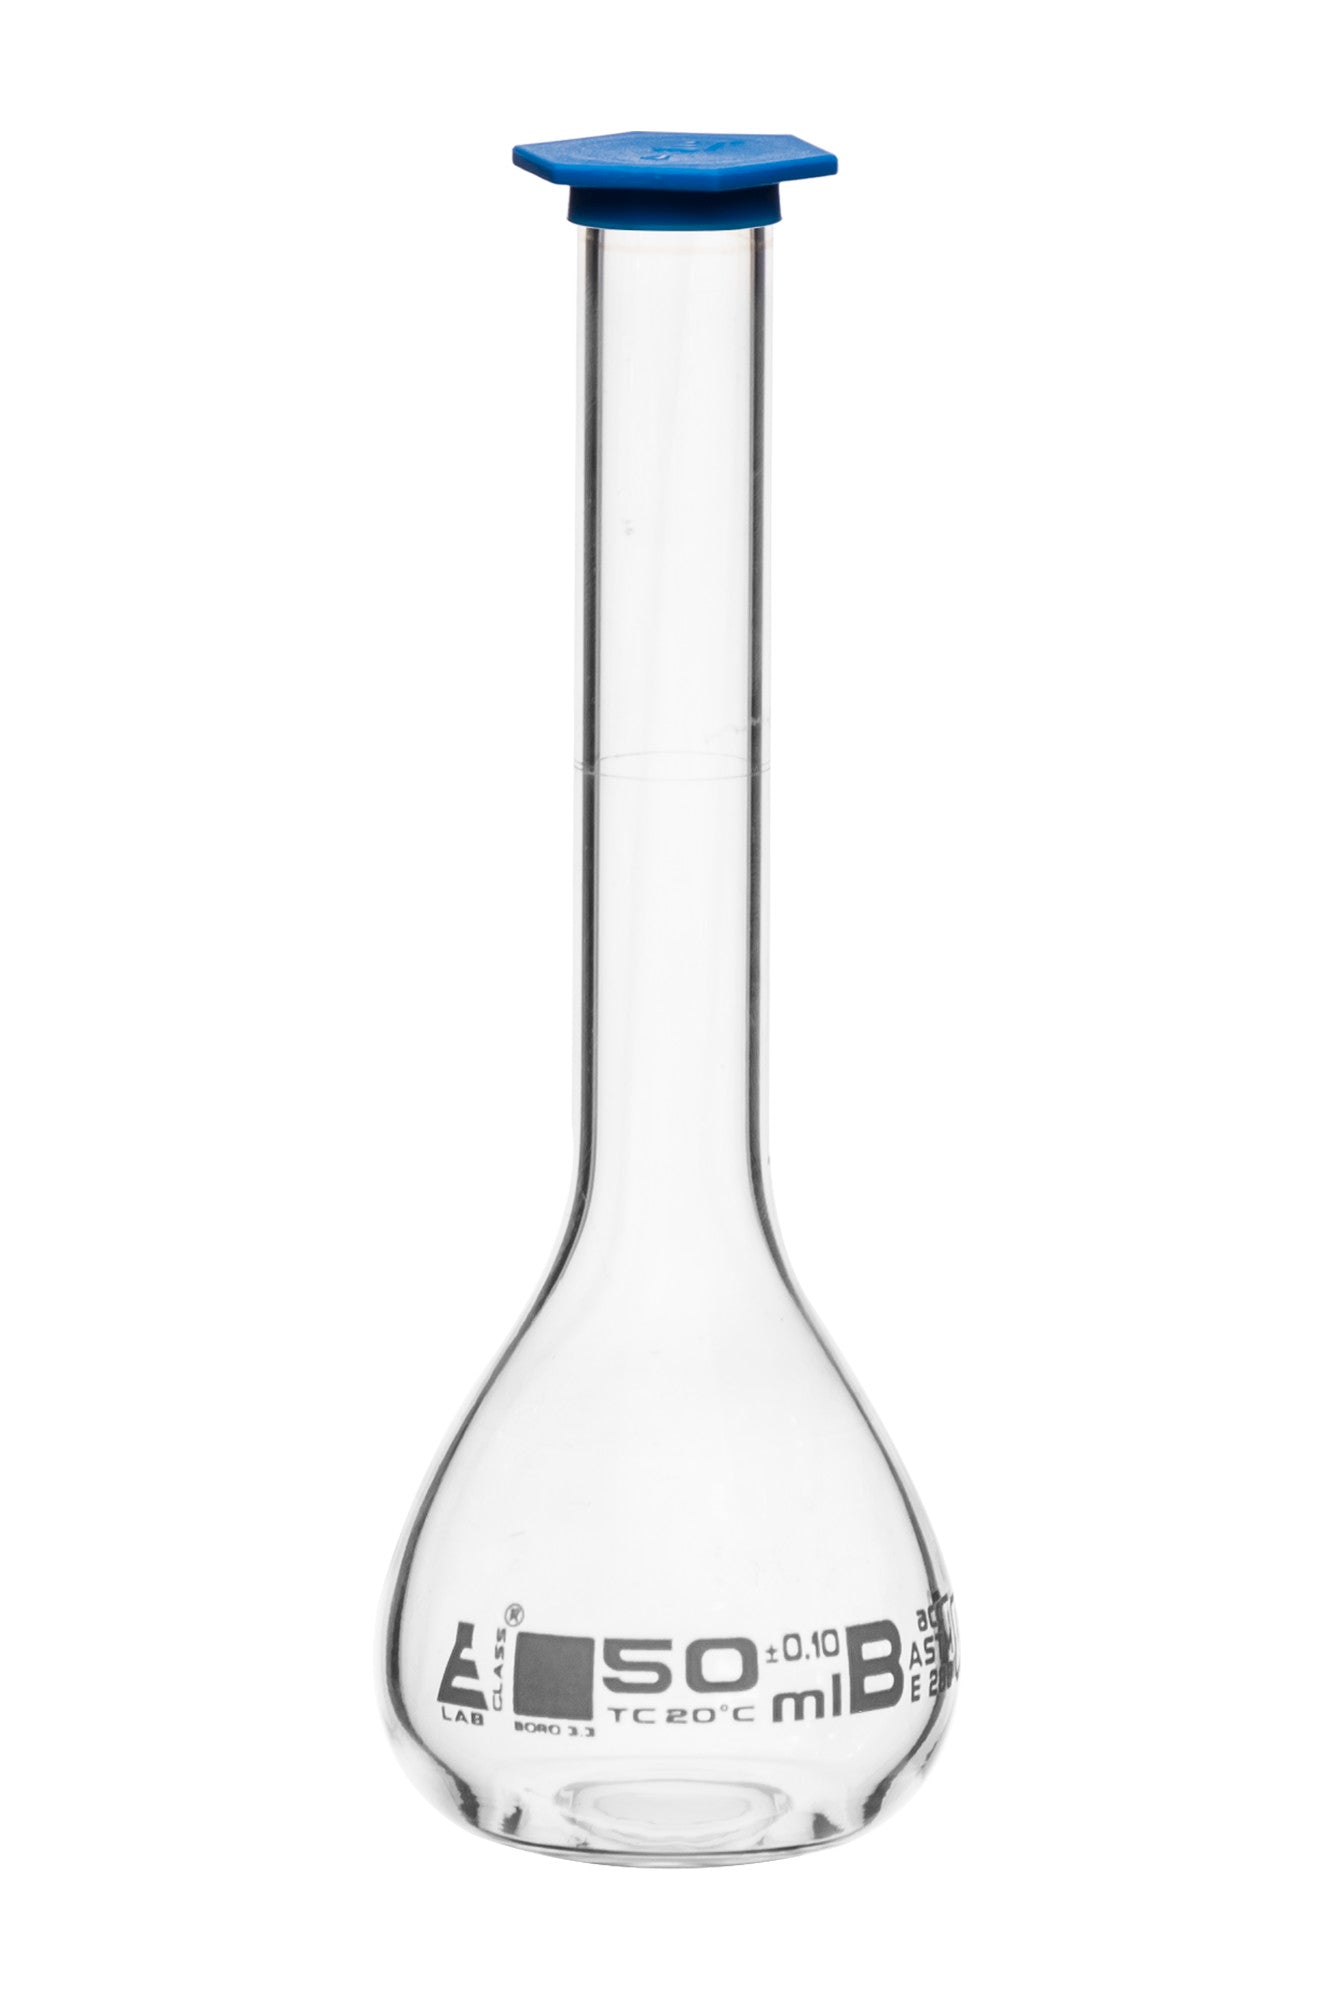 Borosilicate Volumetric Flask with Polyethylene Snap Cap, 50 ml, Class B, White Print, ASTM, Autoclavable